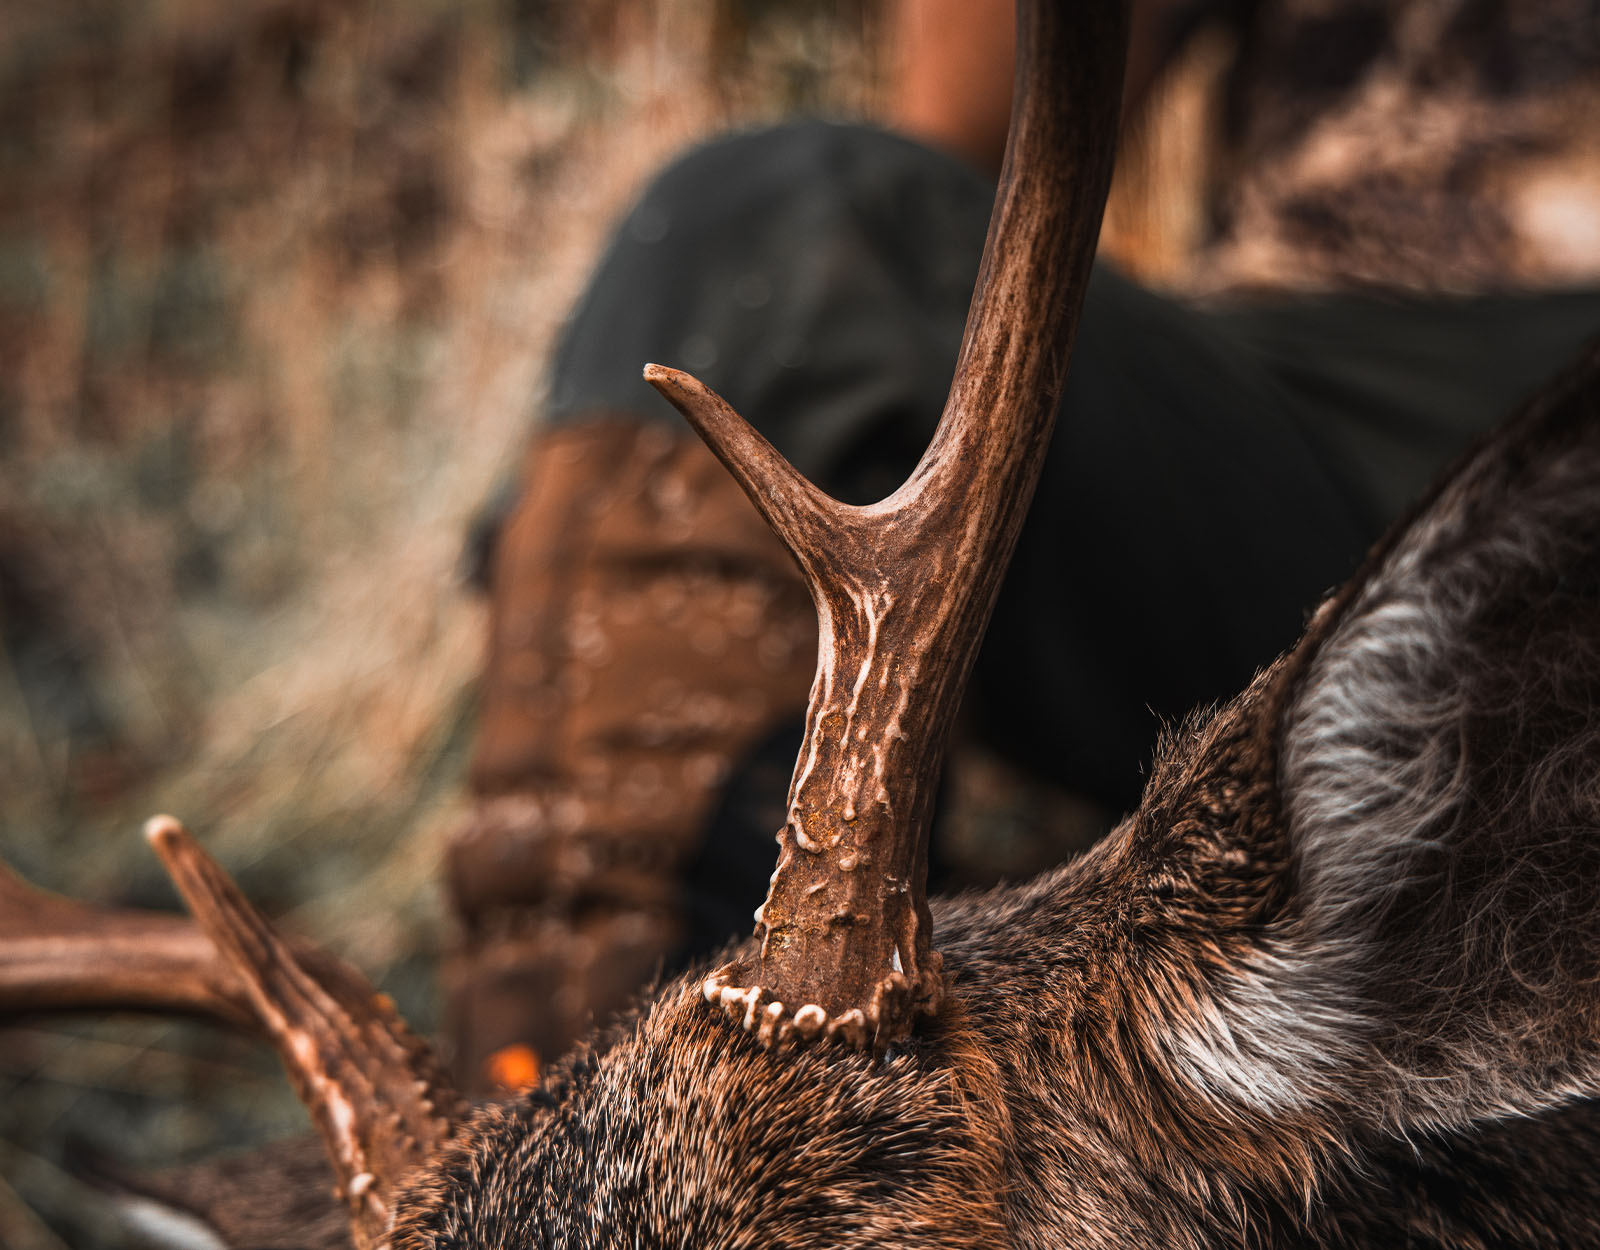 A close-up of a blacktail deer's antler.